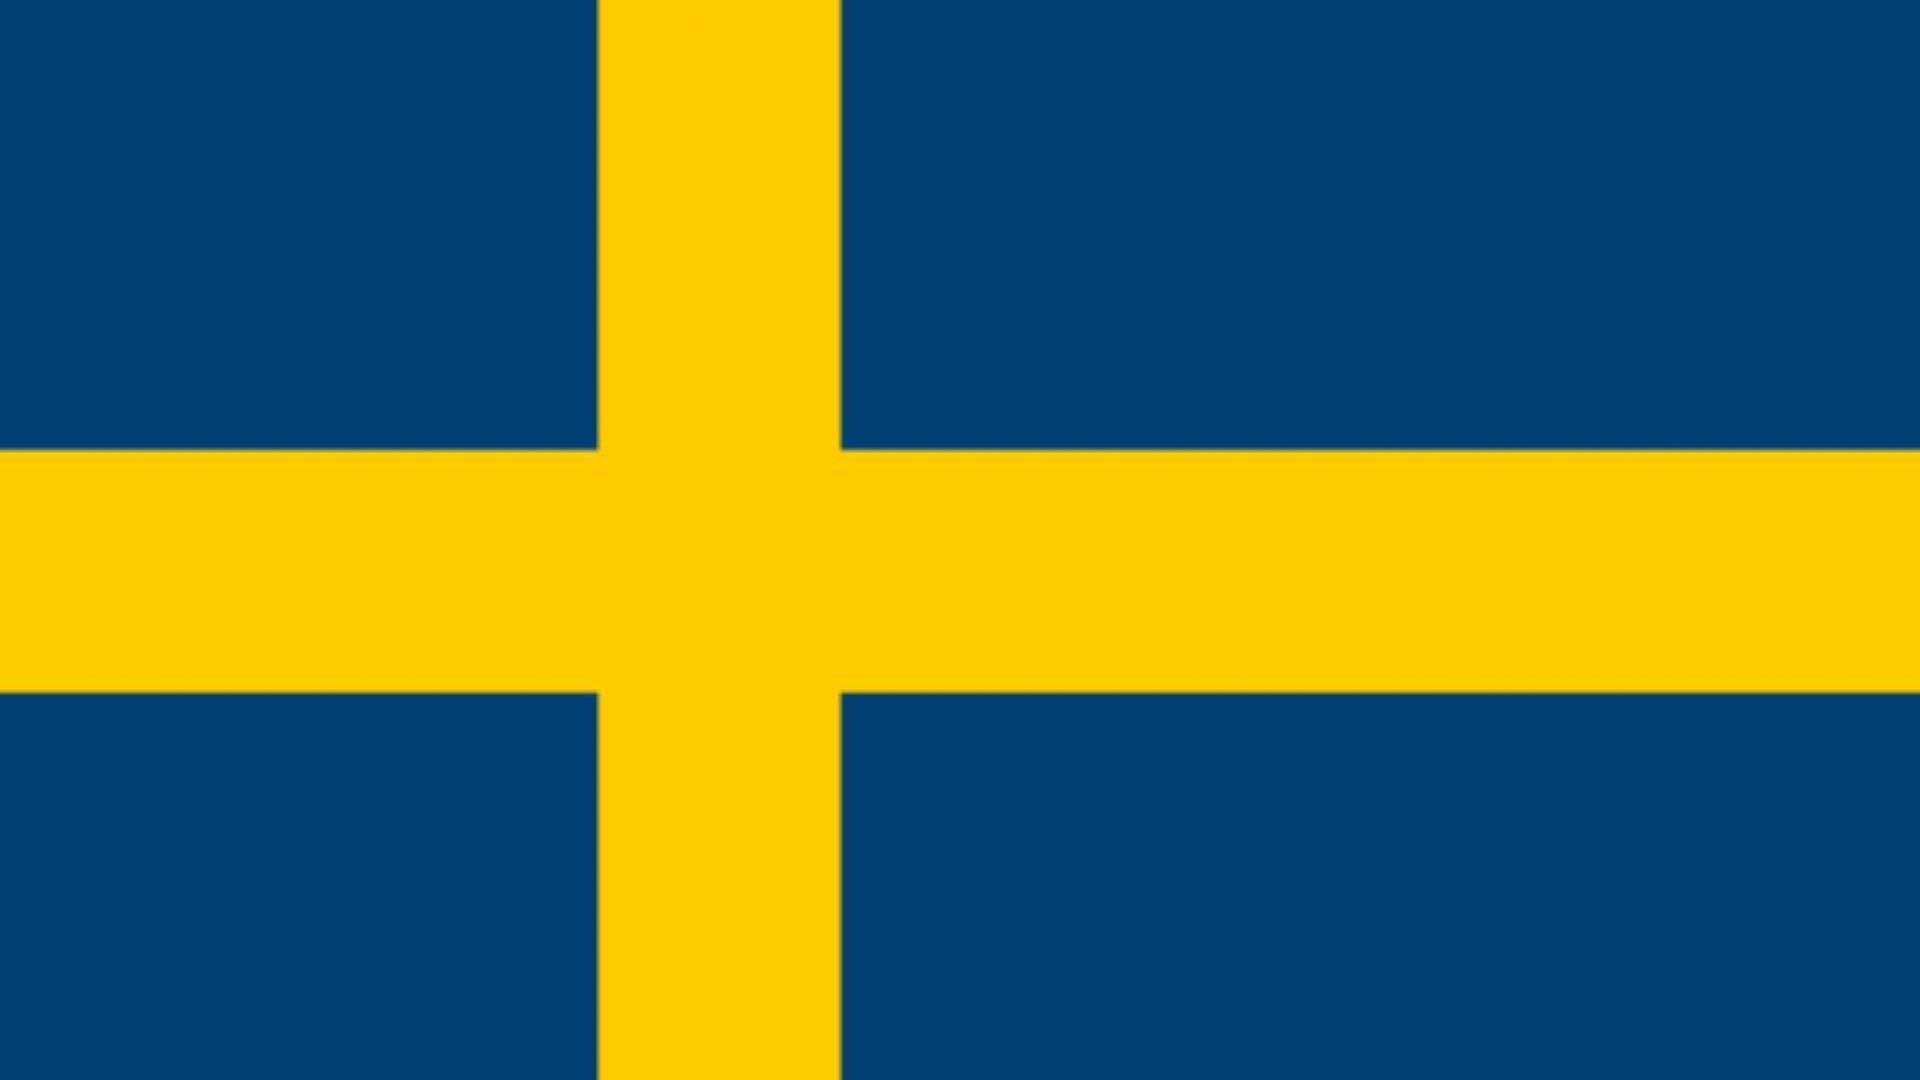 Sweden Flag, High Definition, High Quality, Widescreen